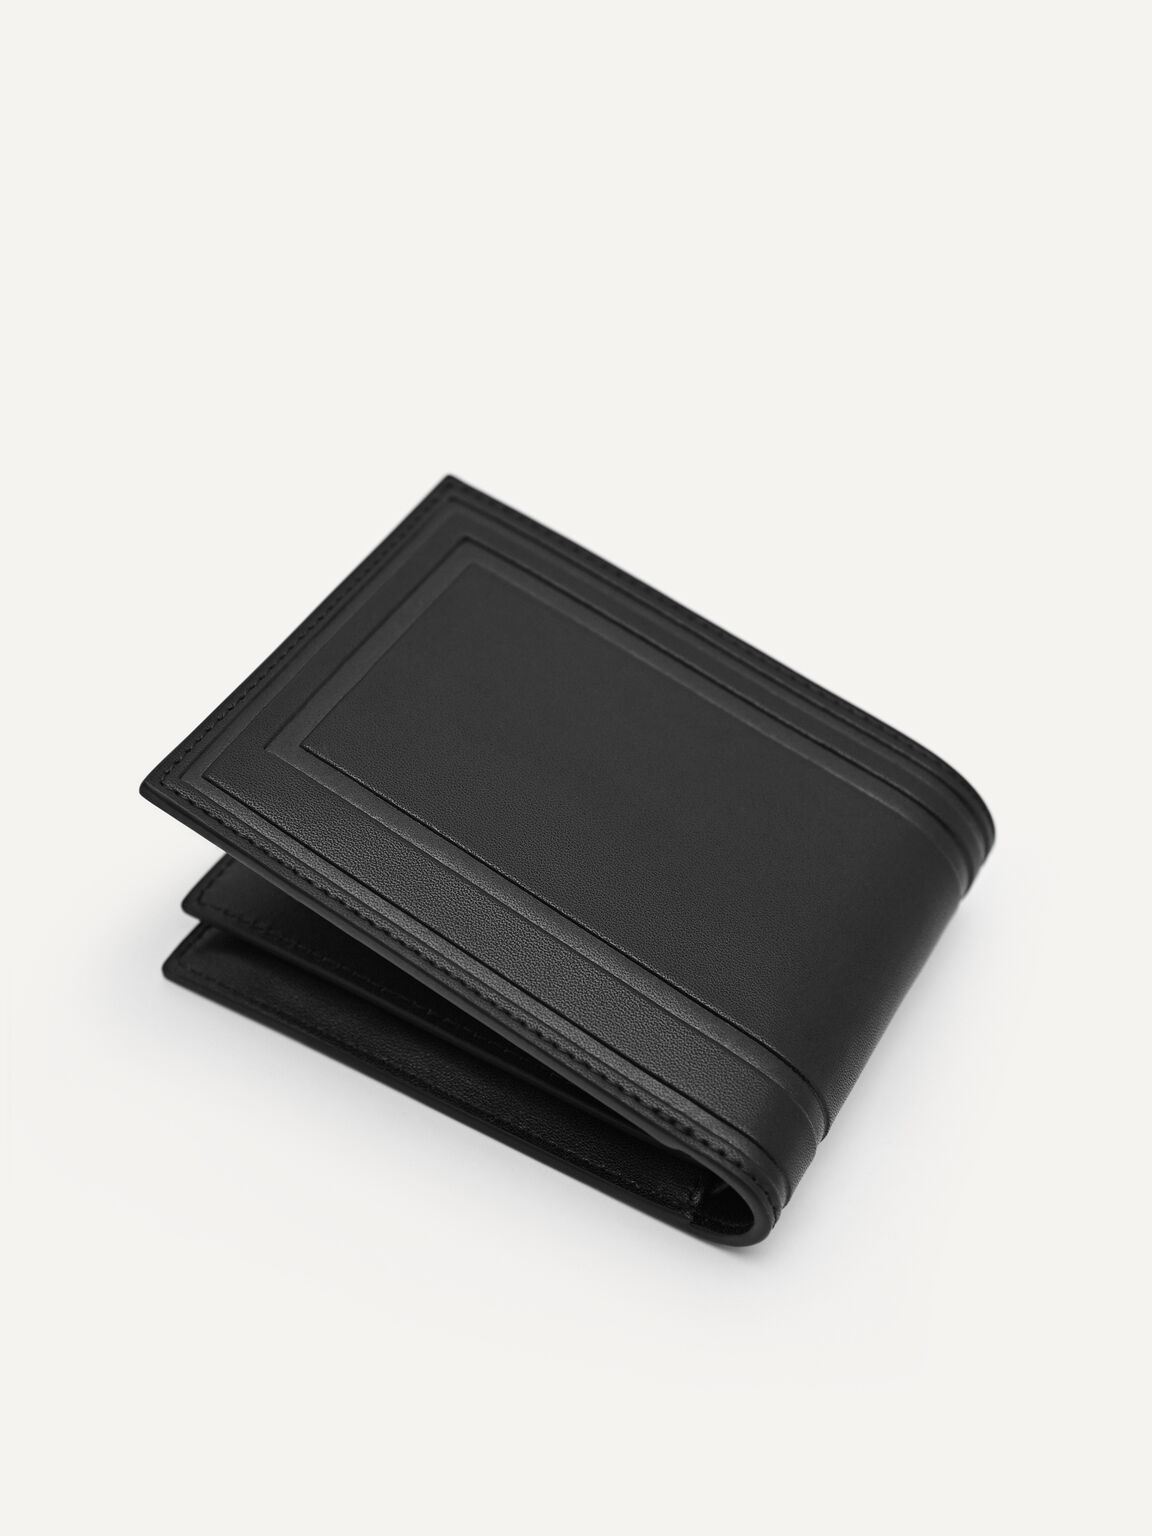 Leather Bi-Fold Wallet With Insert, Black, hi-res